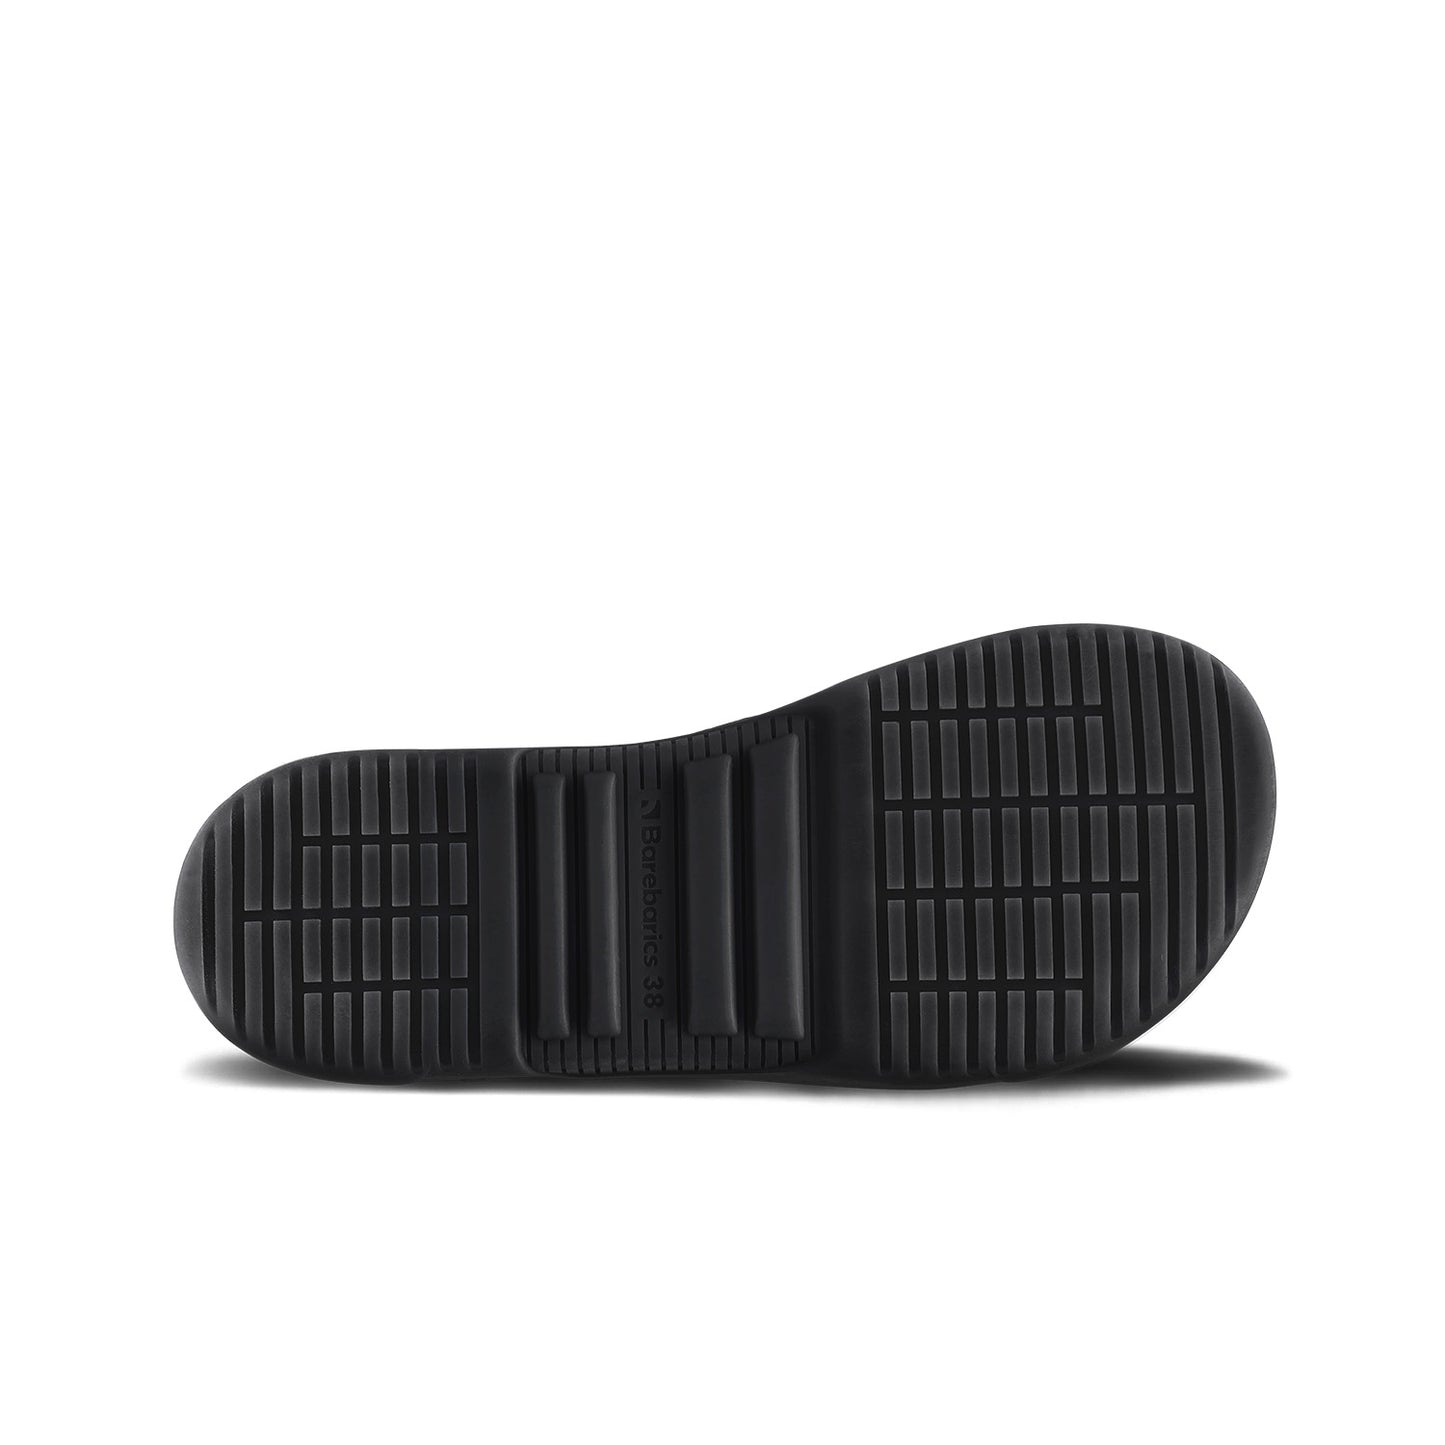 Barebarics Zing Barefoot Sneakers - Black (Leather)